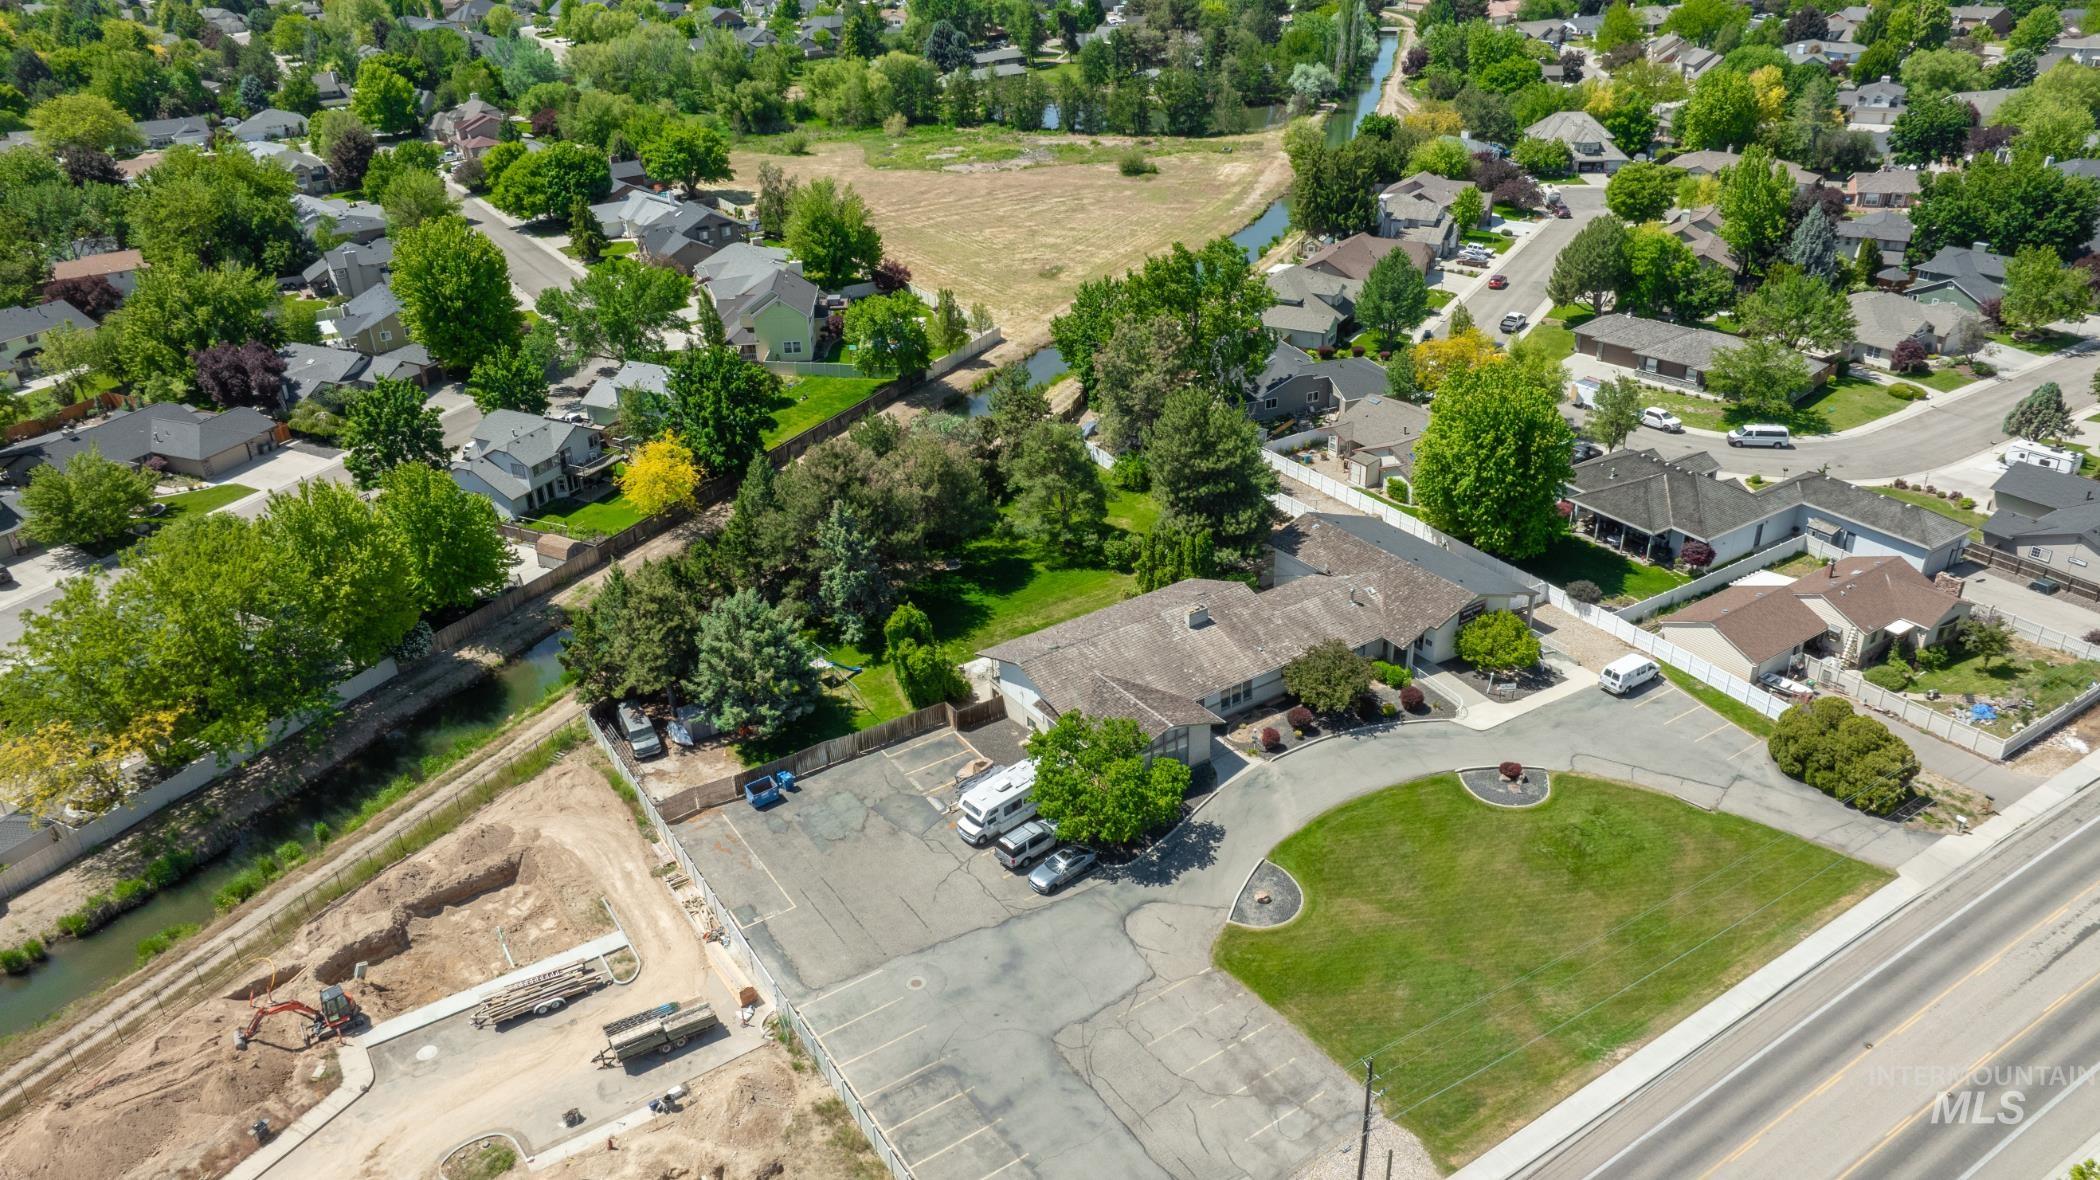 Boise ID Real Estate